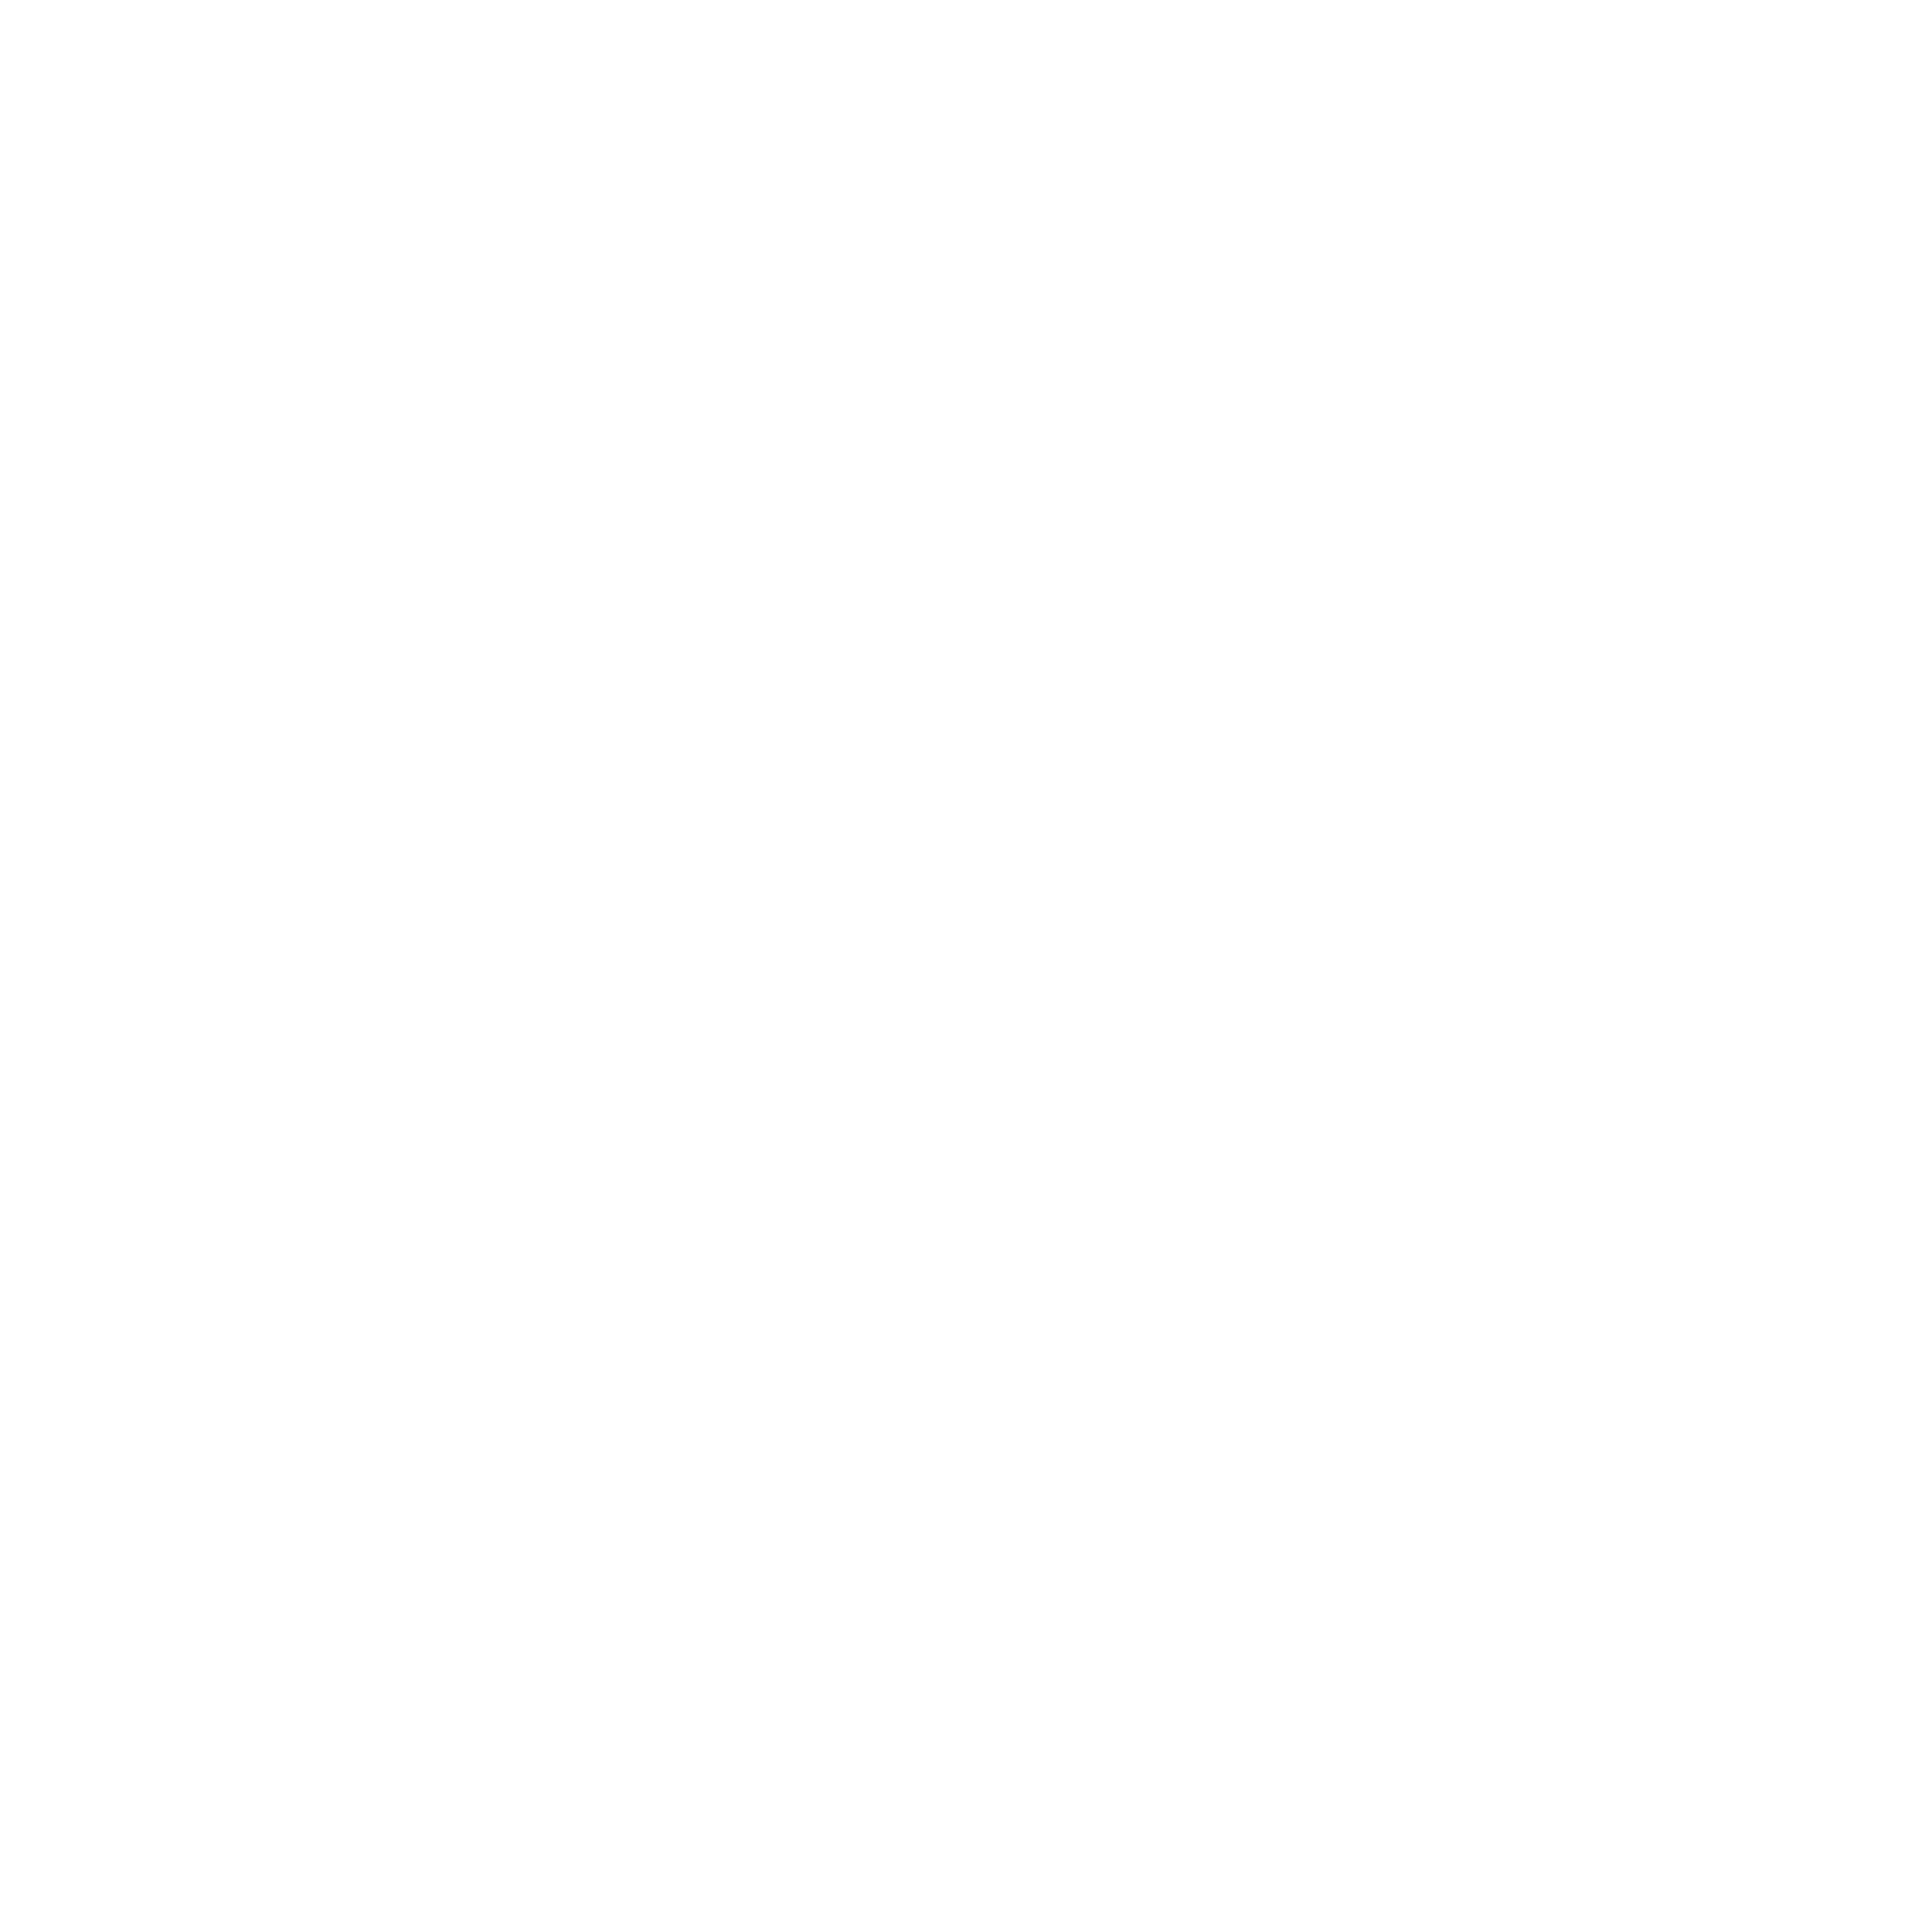 Kloo Logo